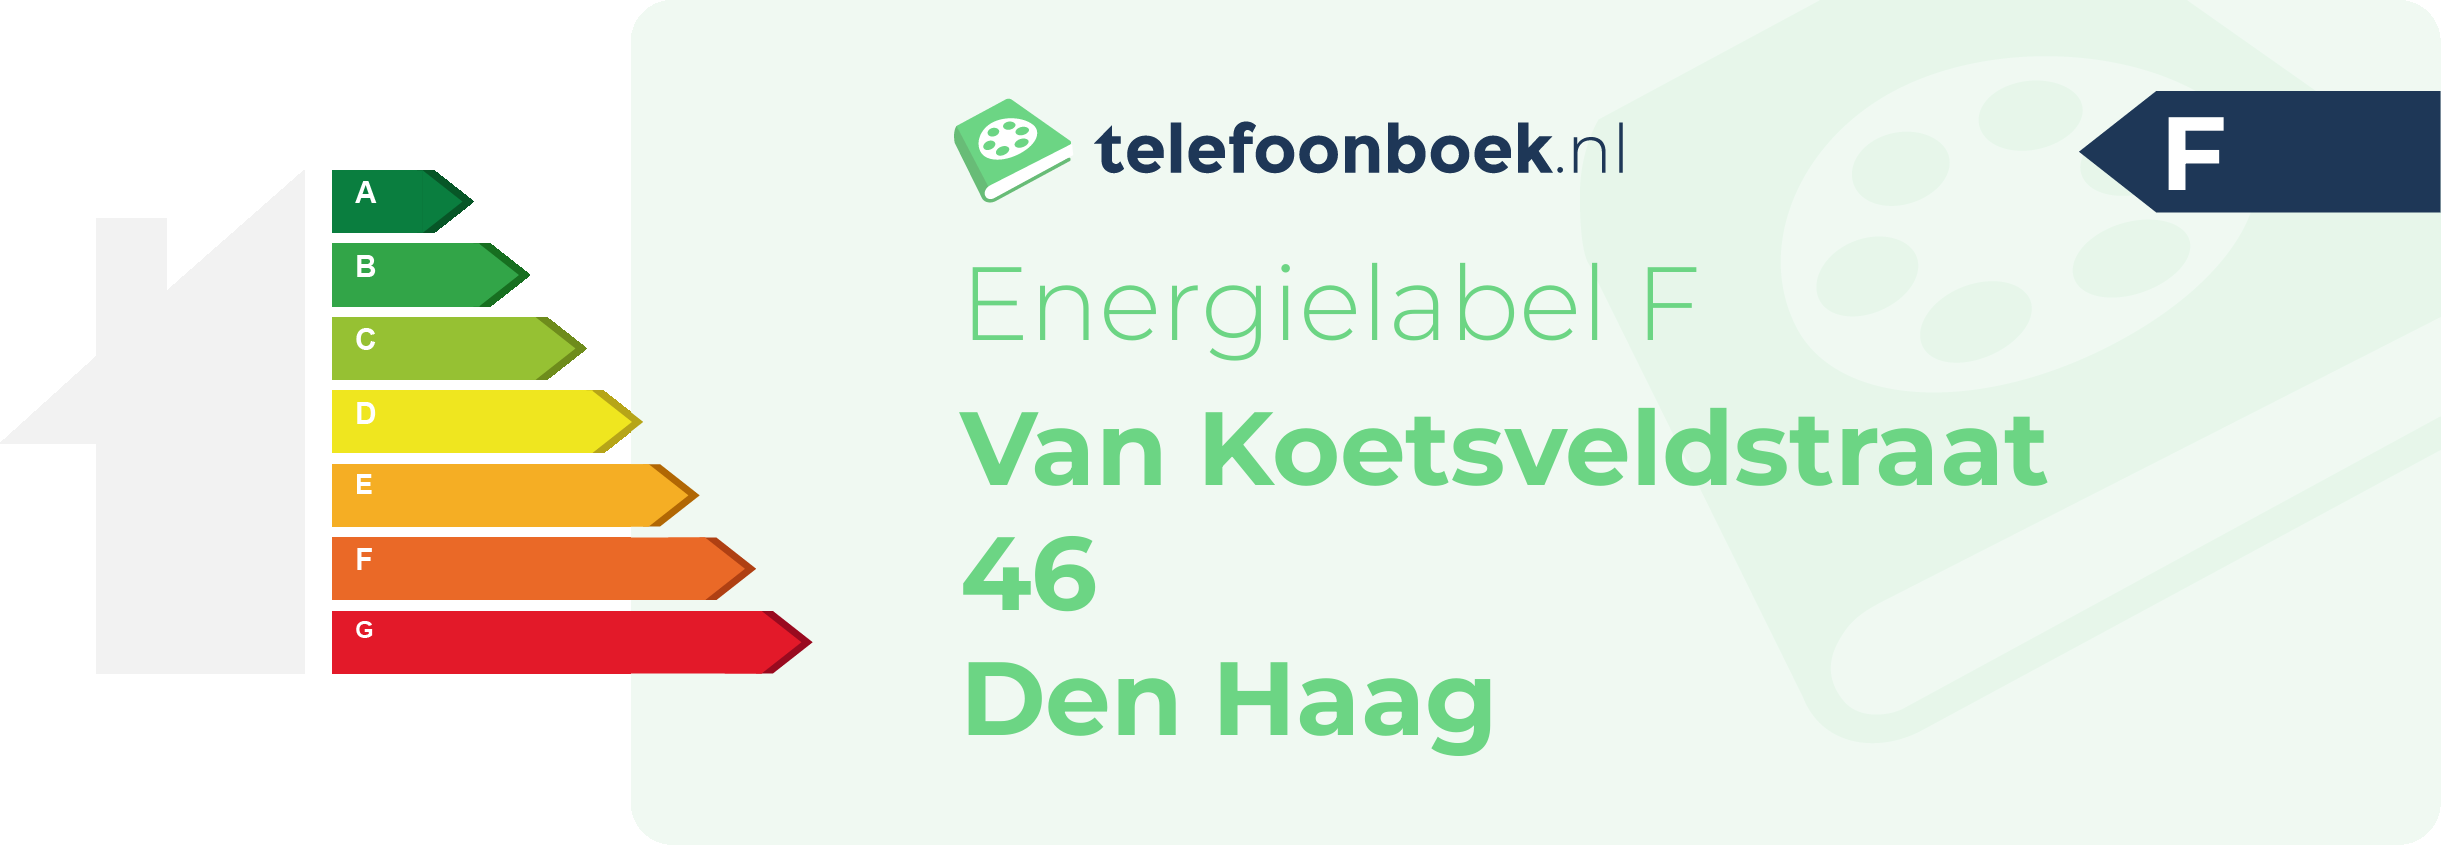 Energielabel Van Koetsveldstraat 46 Den Haag